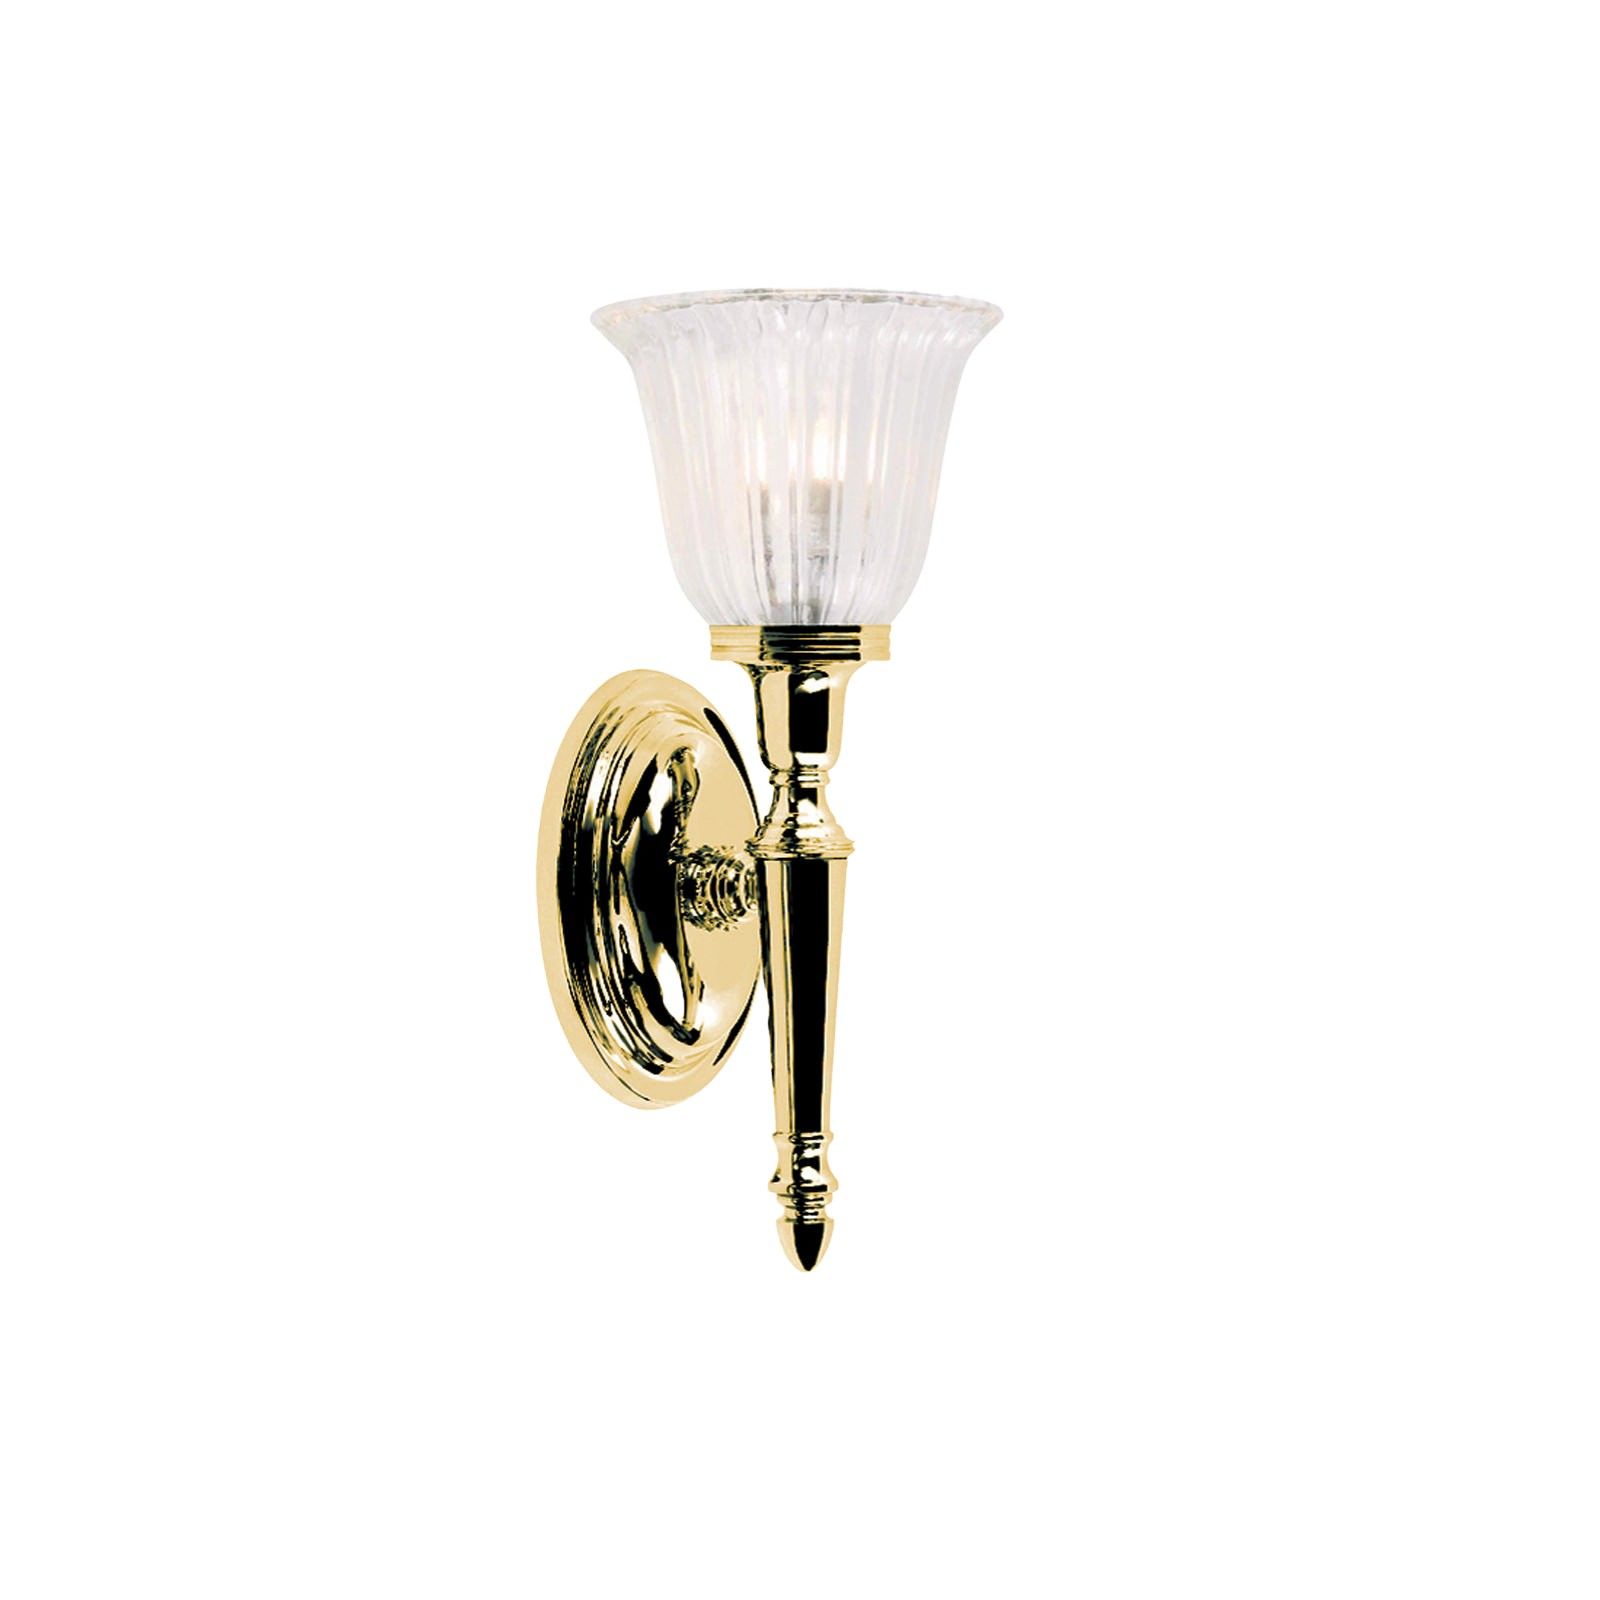 Bathroom wall light - Ryde 1 in polished brass